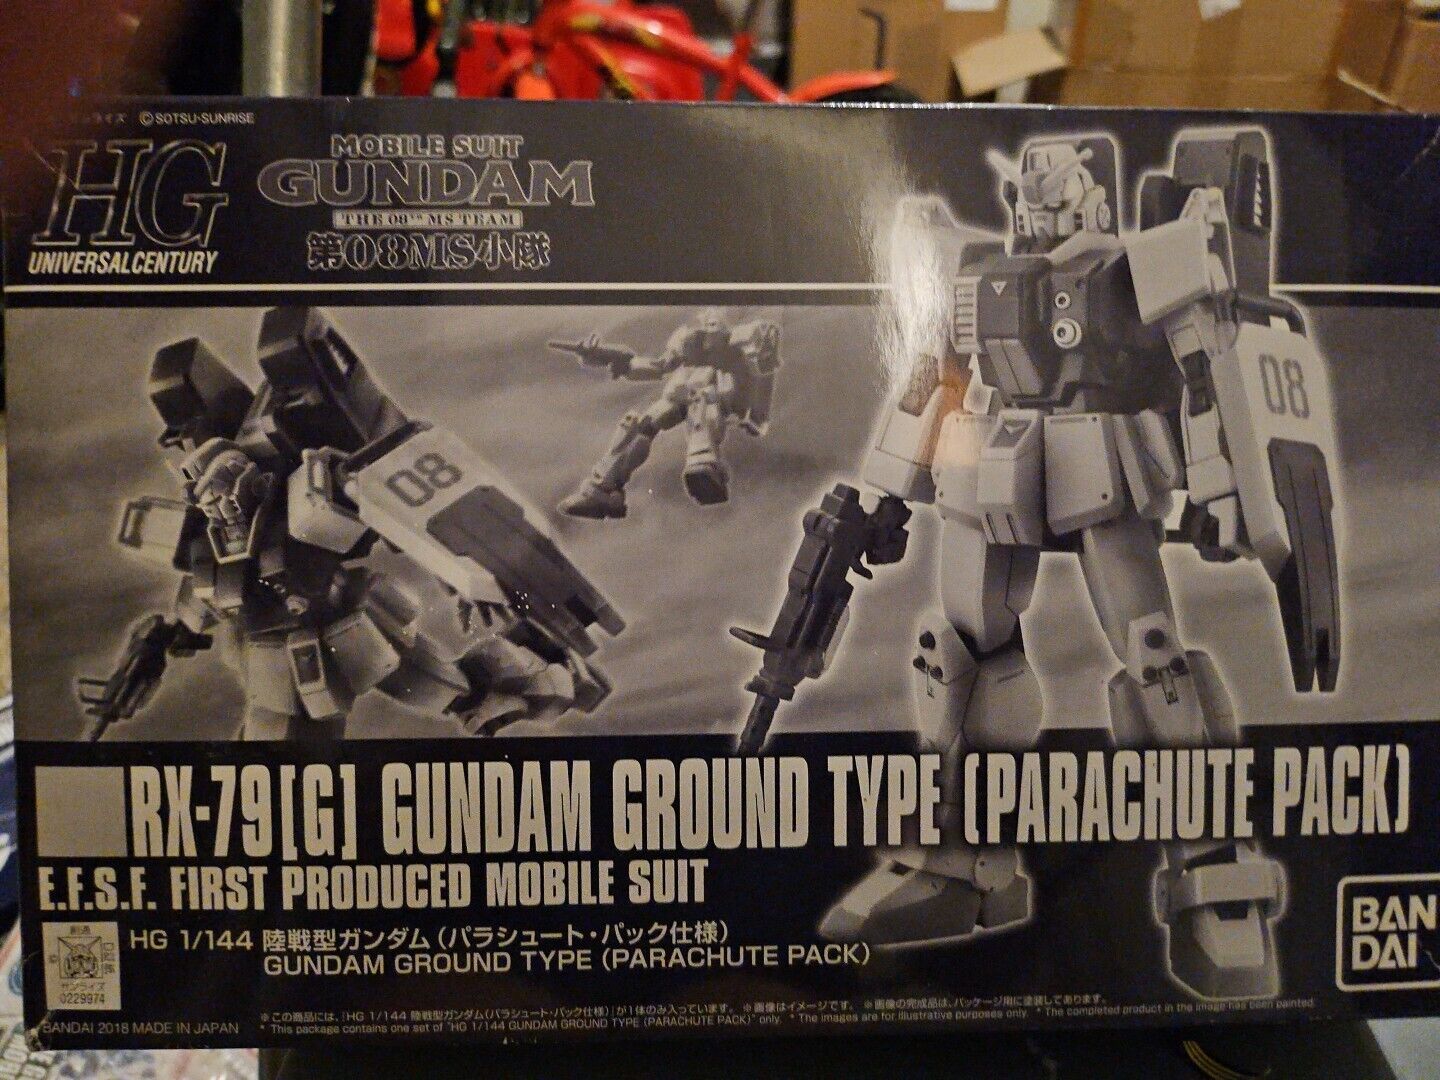 P-BANDAI HGUC RX-79 [G] Gundam Ground Type Parachute Pack HG 1/144... From Japan